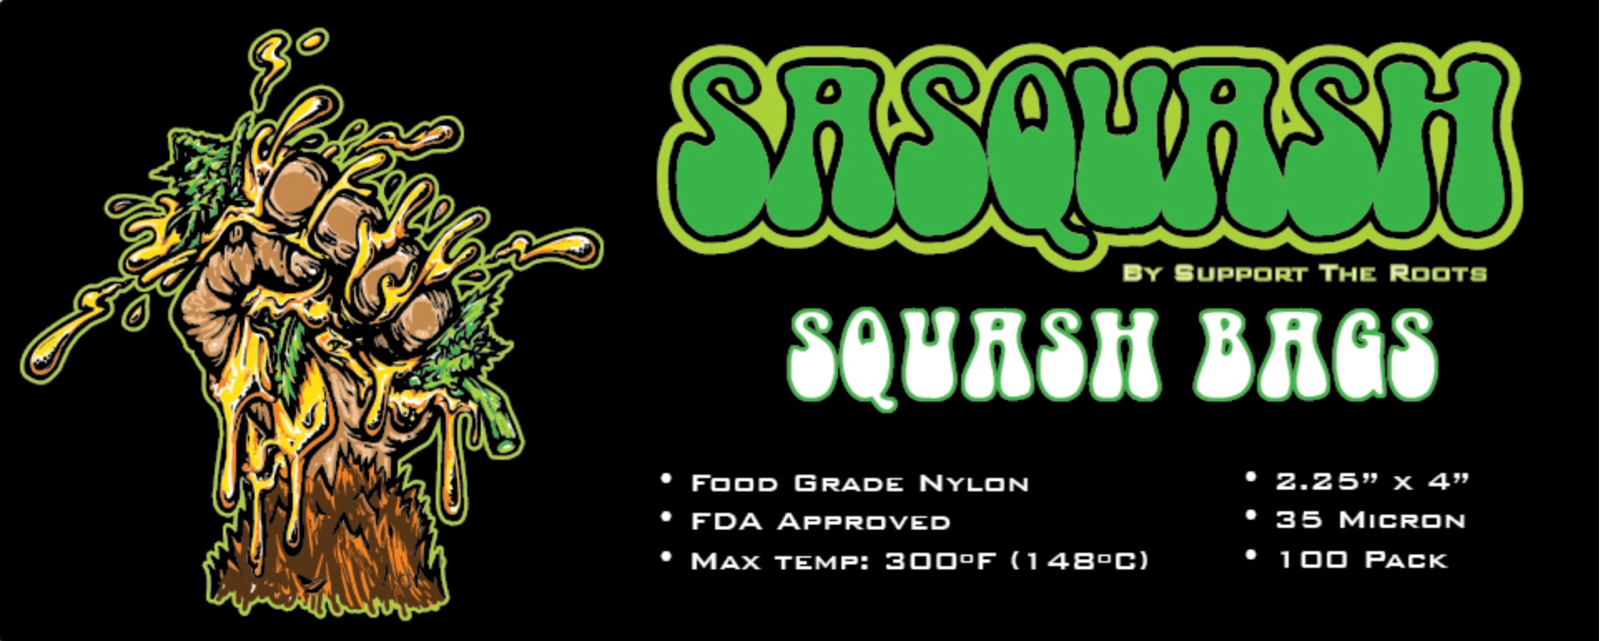 Sasquash 2.25” x 4” Squash Rosin Bags